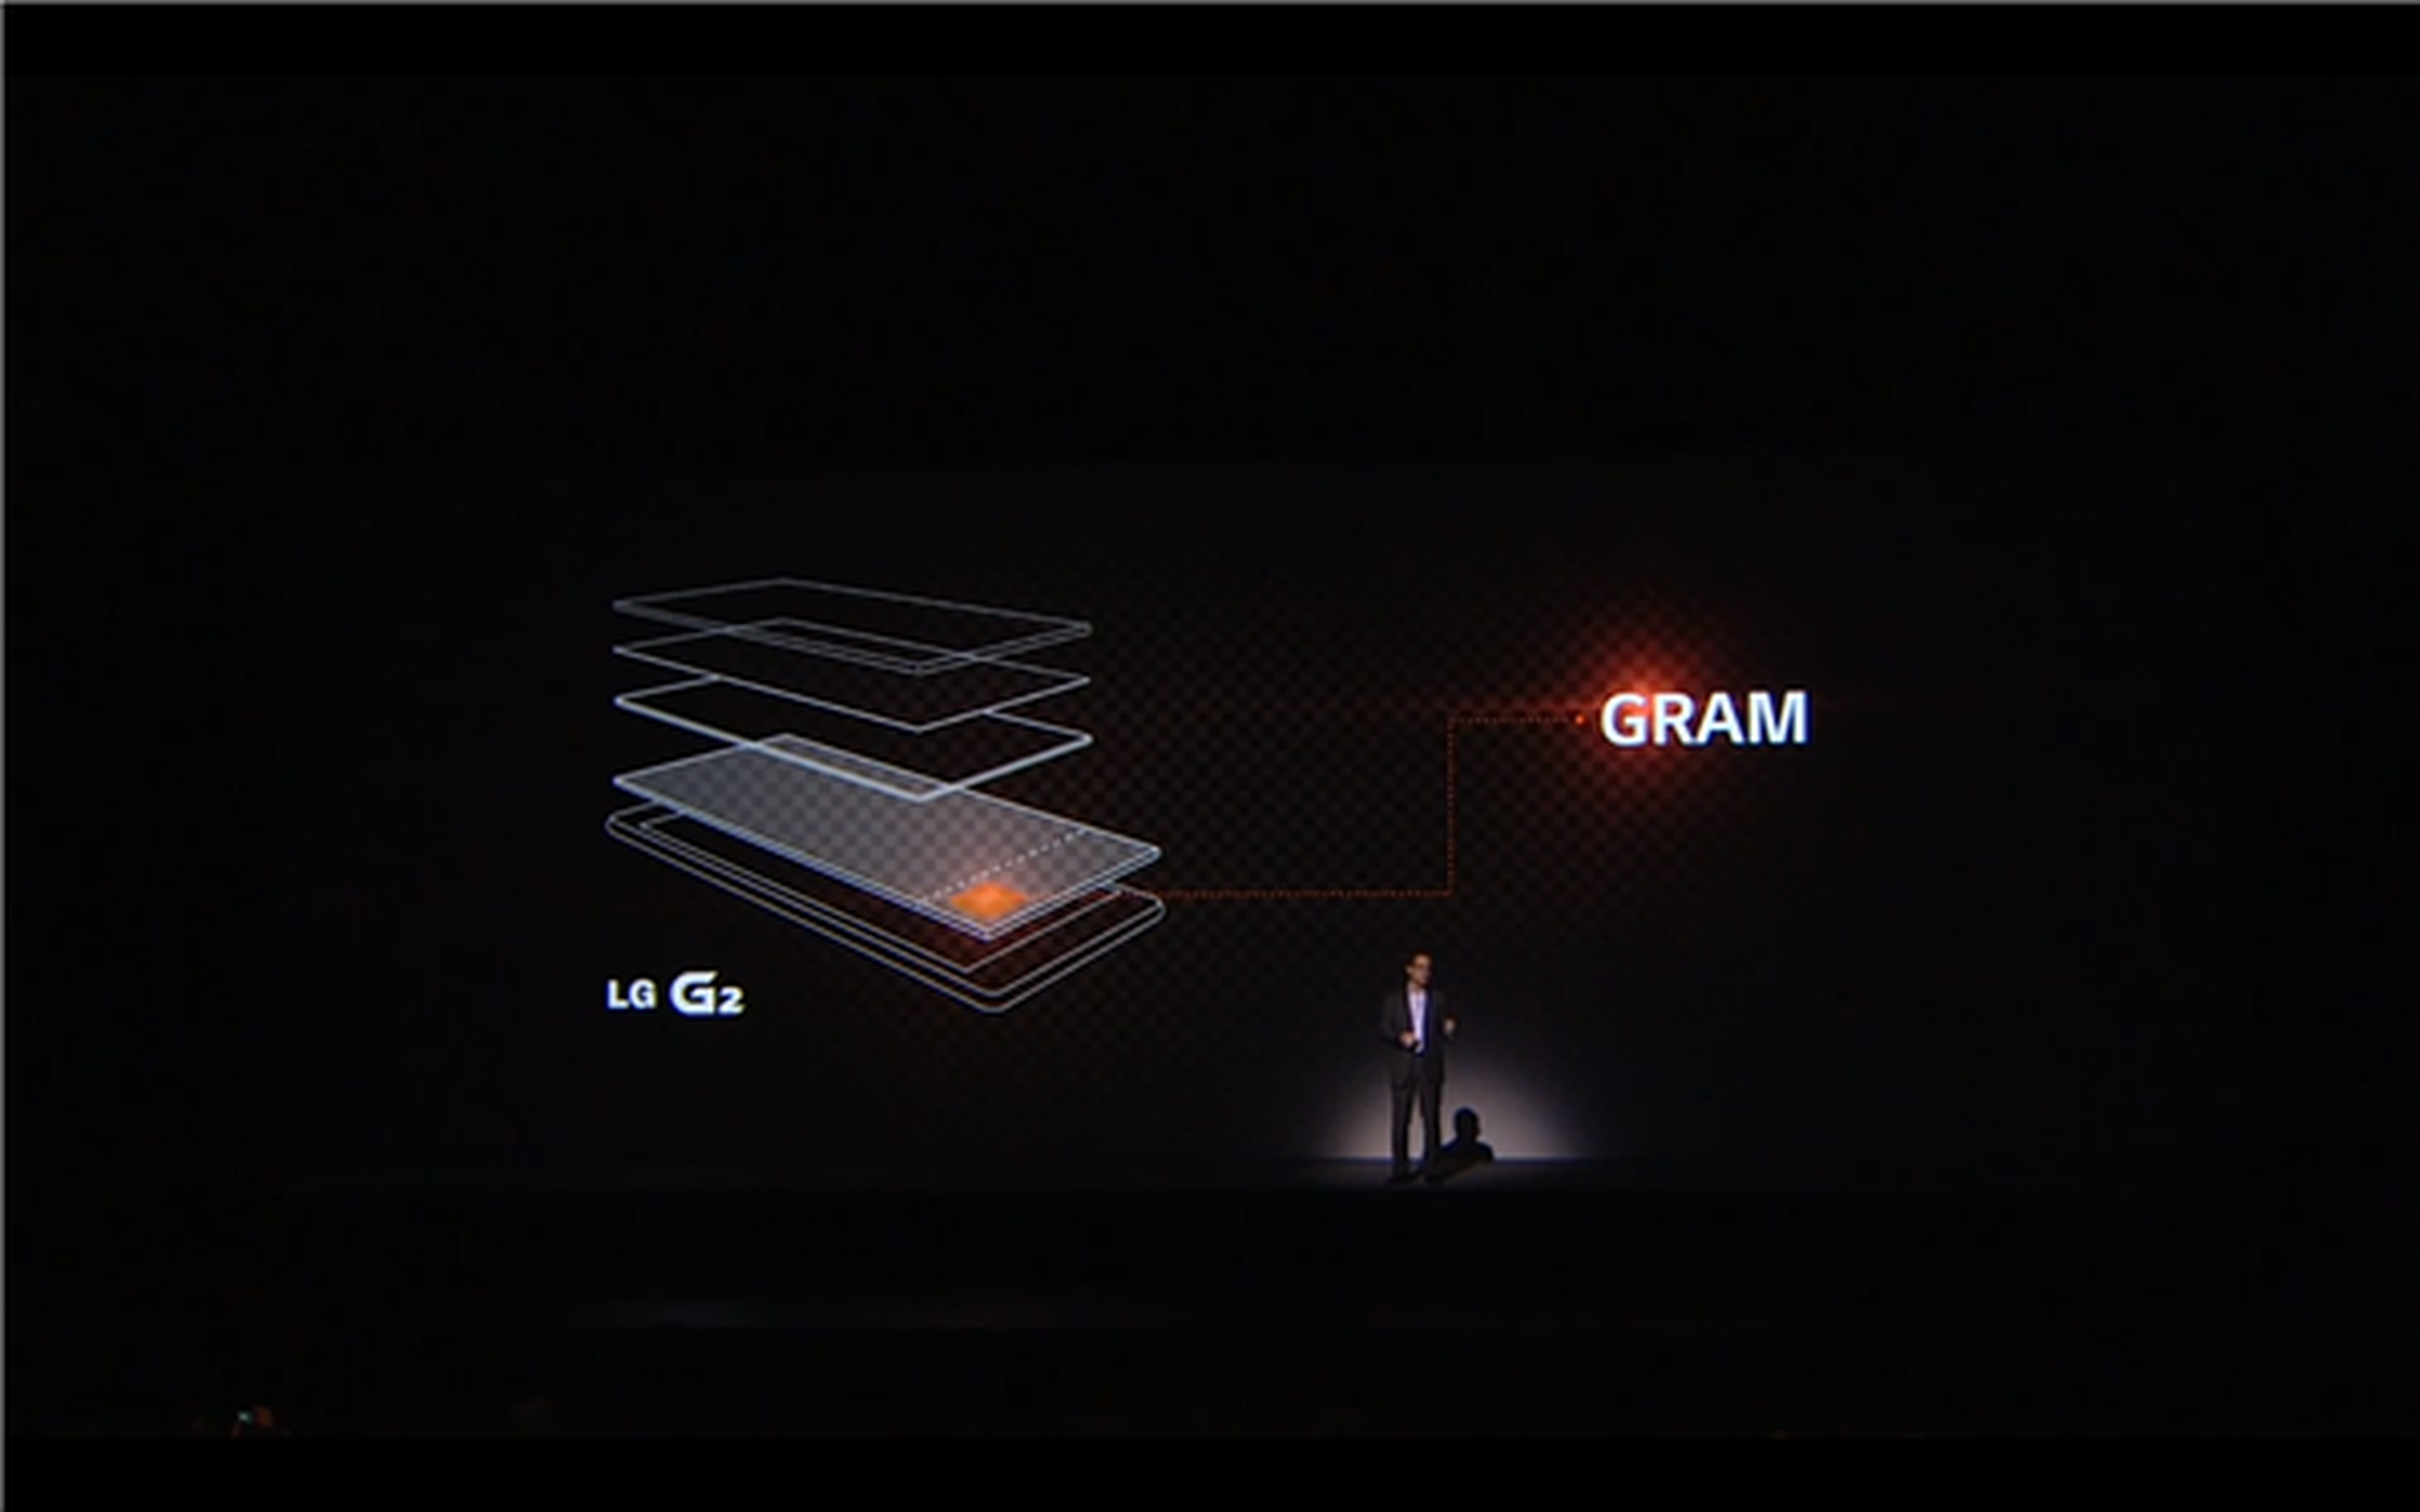 LG G2 presentado oficialmente: pantalla 5.2'' Full HD IPS